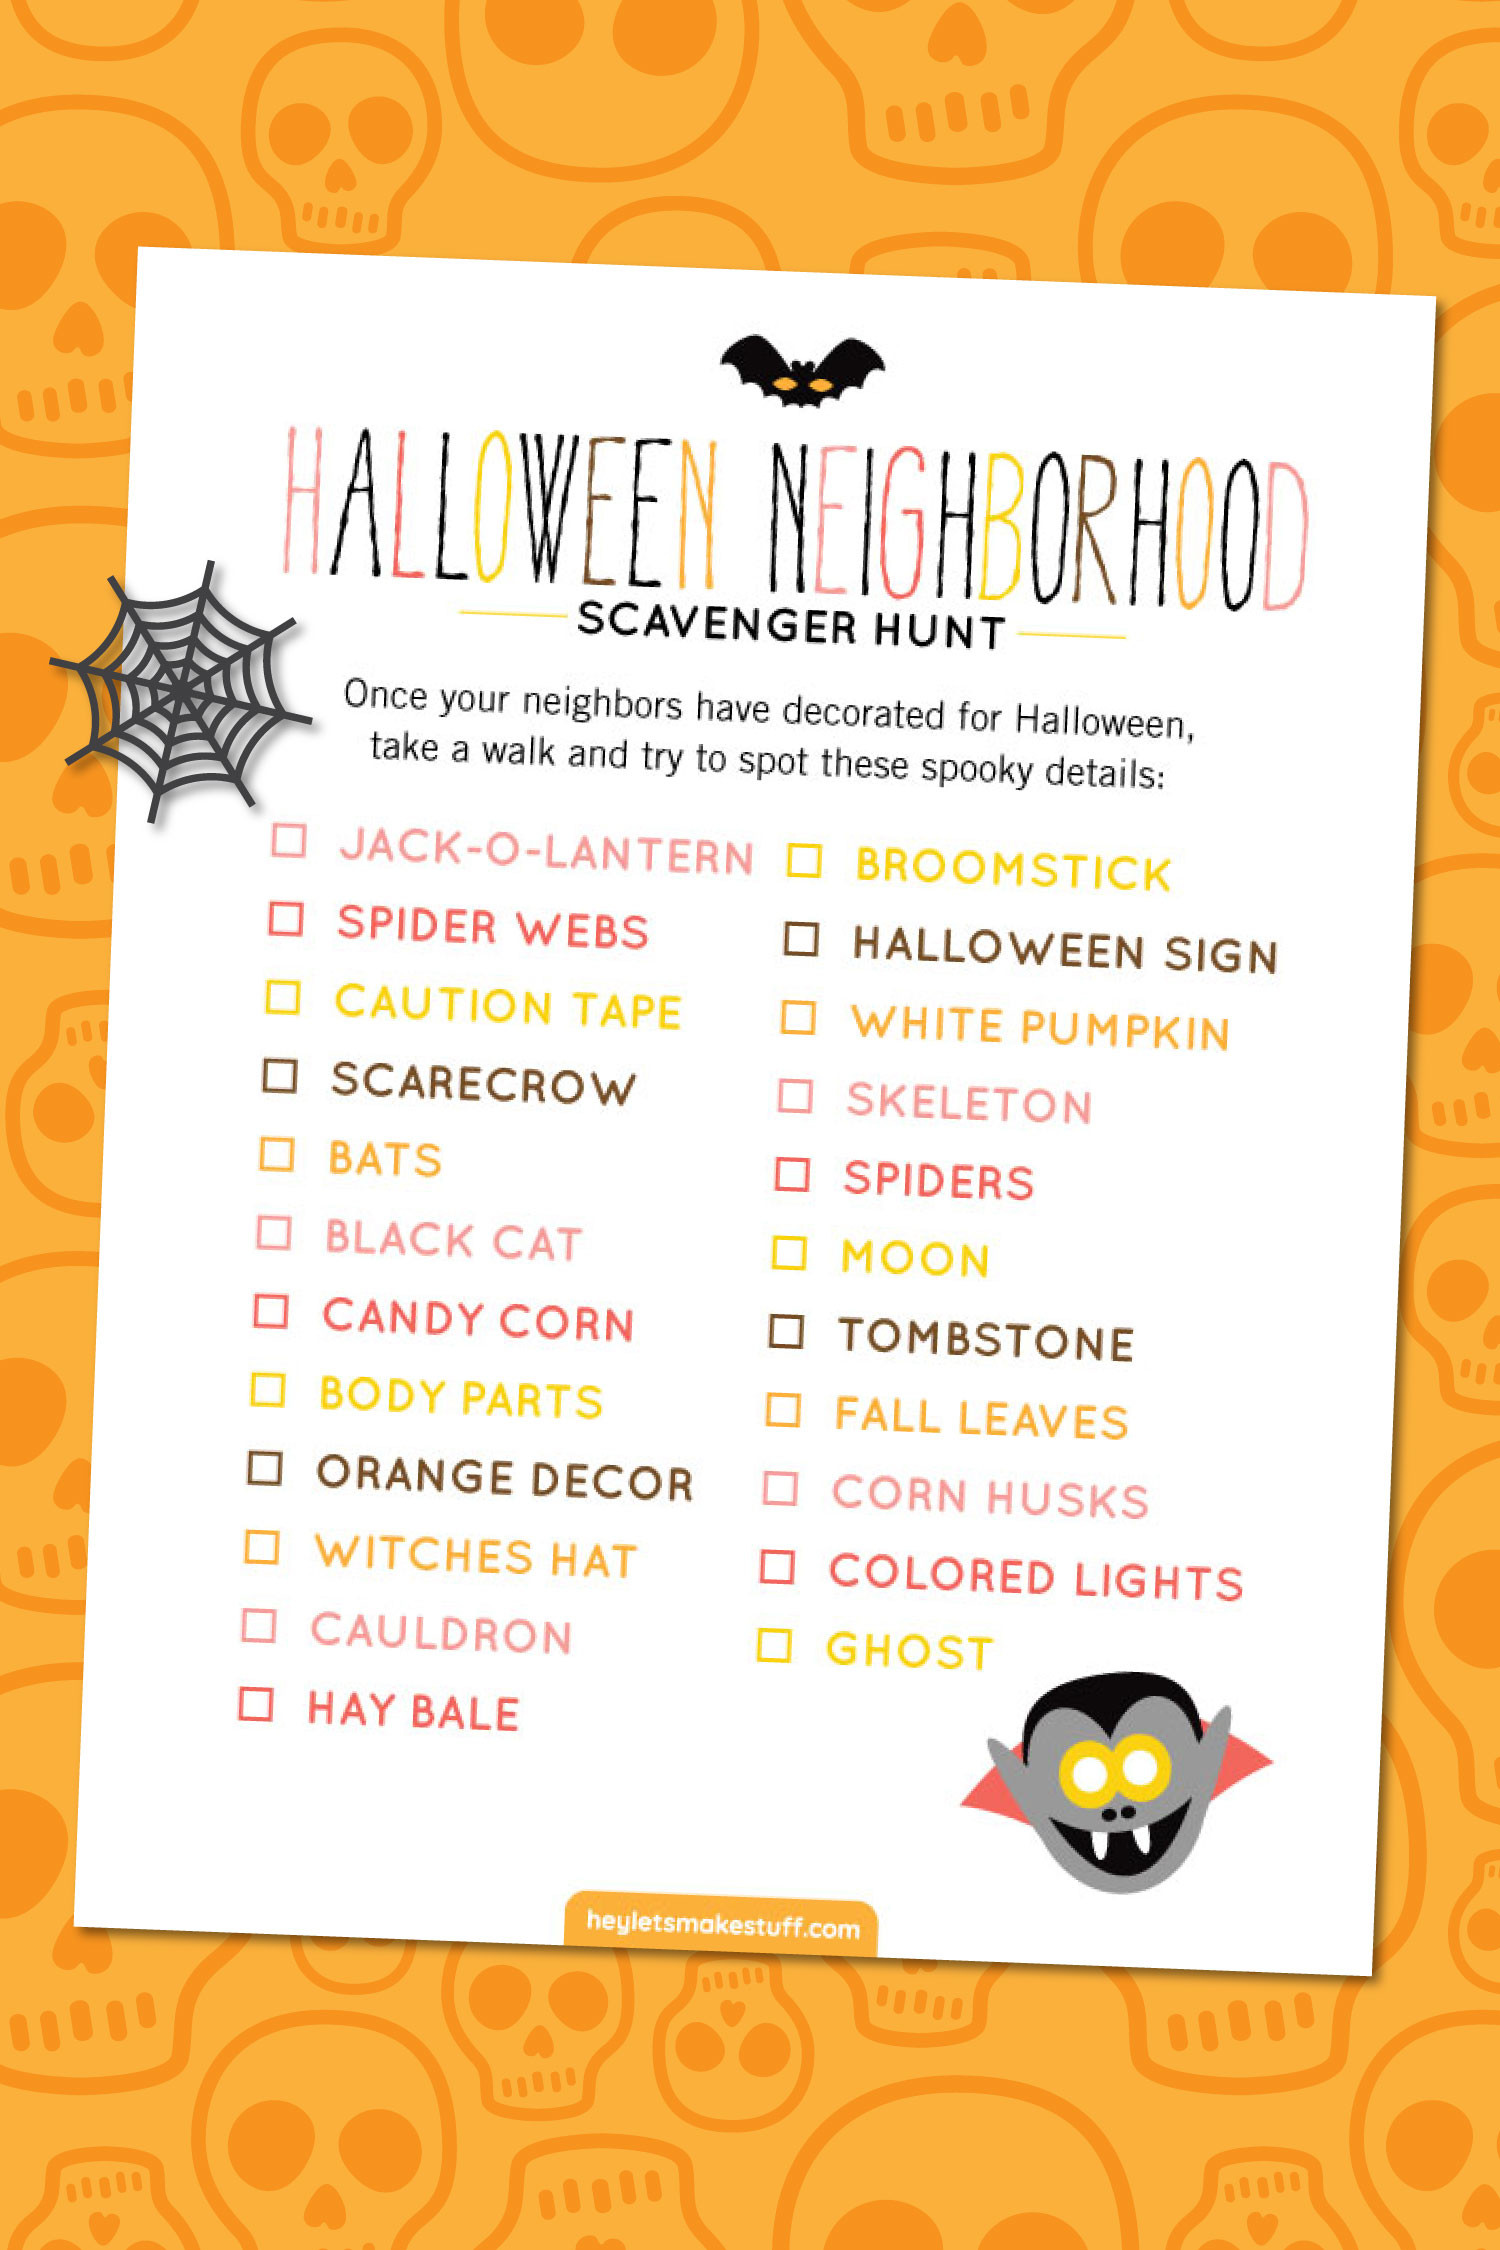 Halloween Scavenger Hunt Ideas
 Trick Treat Yo Self Sign Hey Let s Make Stuff